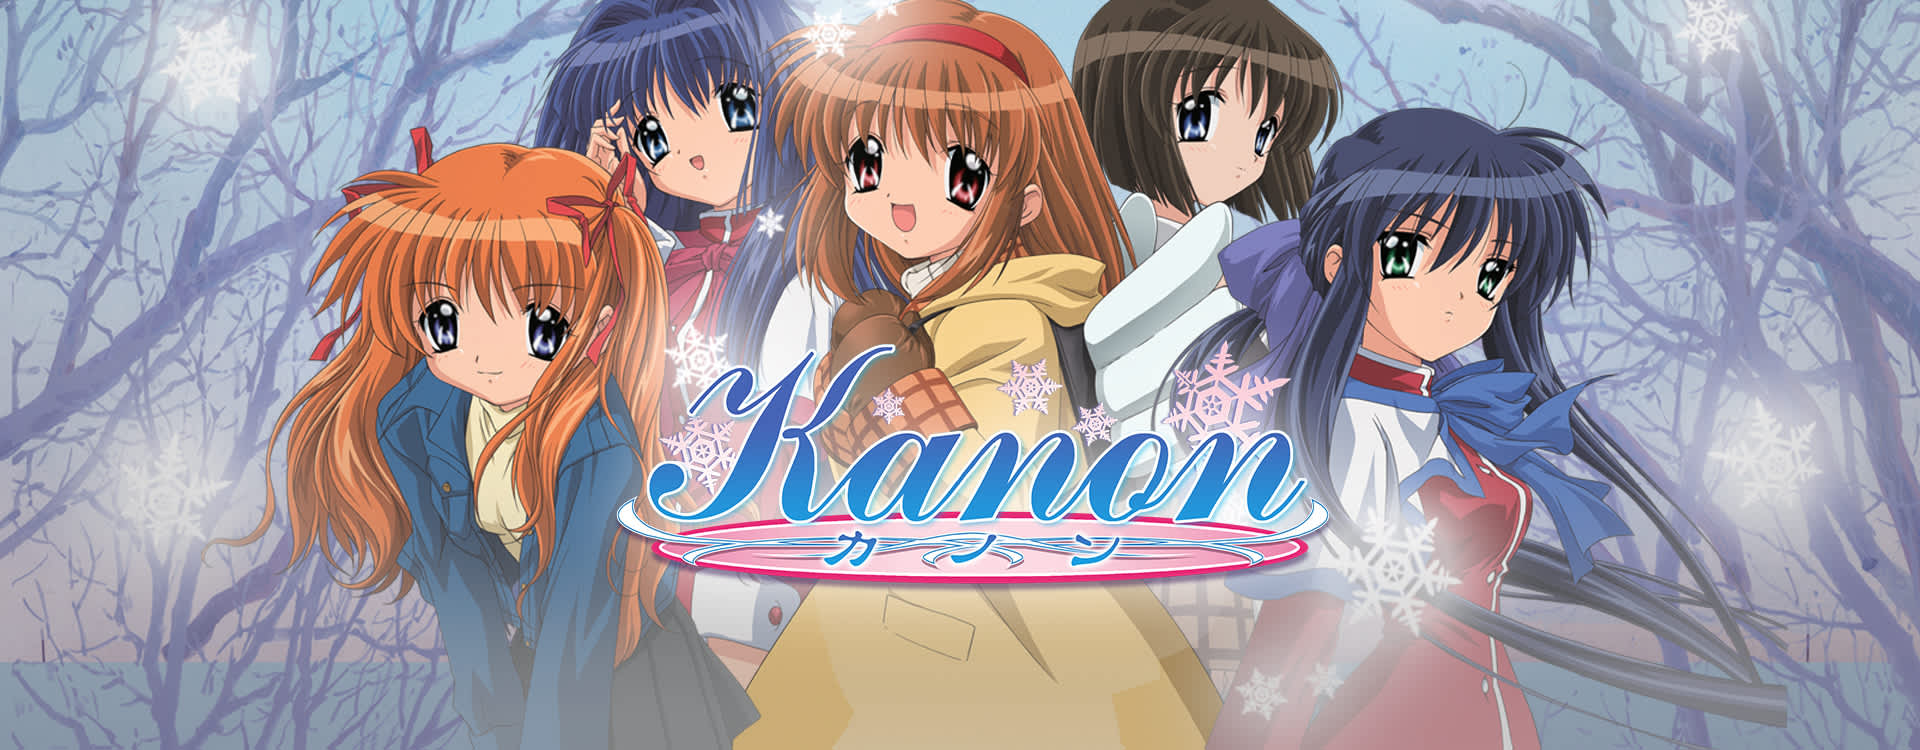 Watch Kanon Episodes Sub And Dub Drama Romance Anime Funimation 